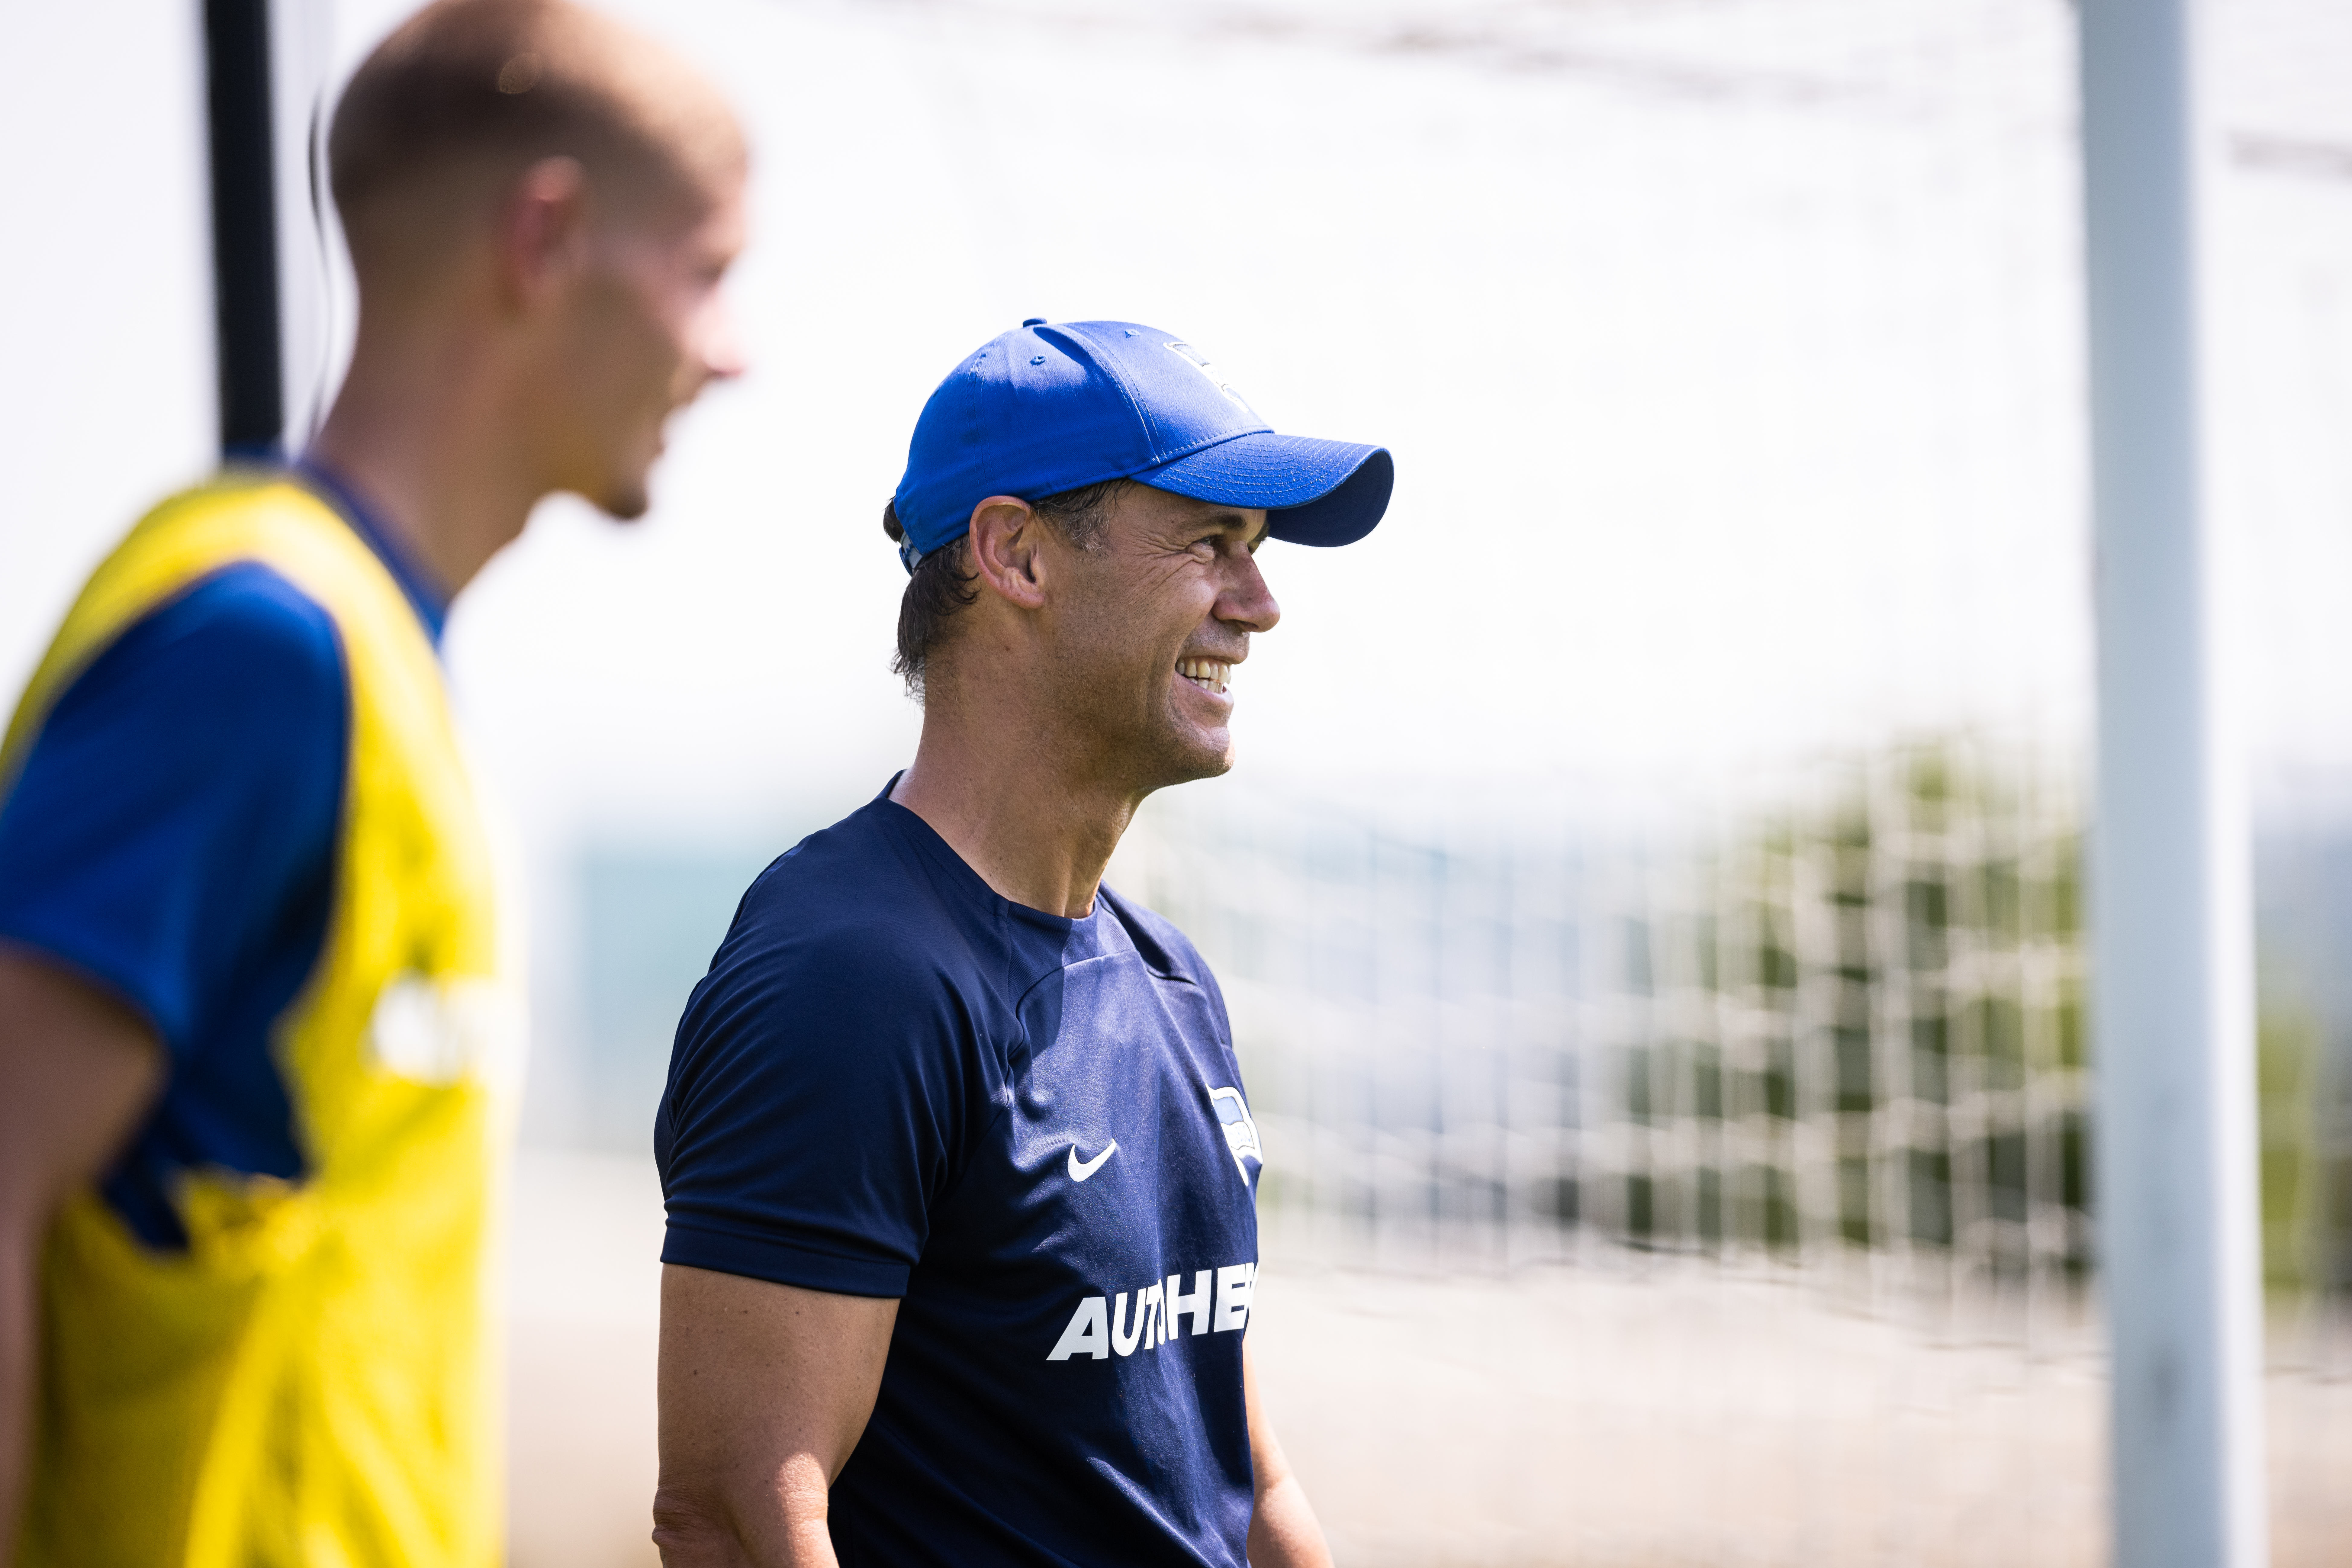 Tamás Bódog im Profil während er auf dem Trainingsplatz lacht.